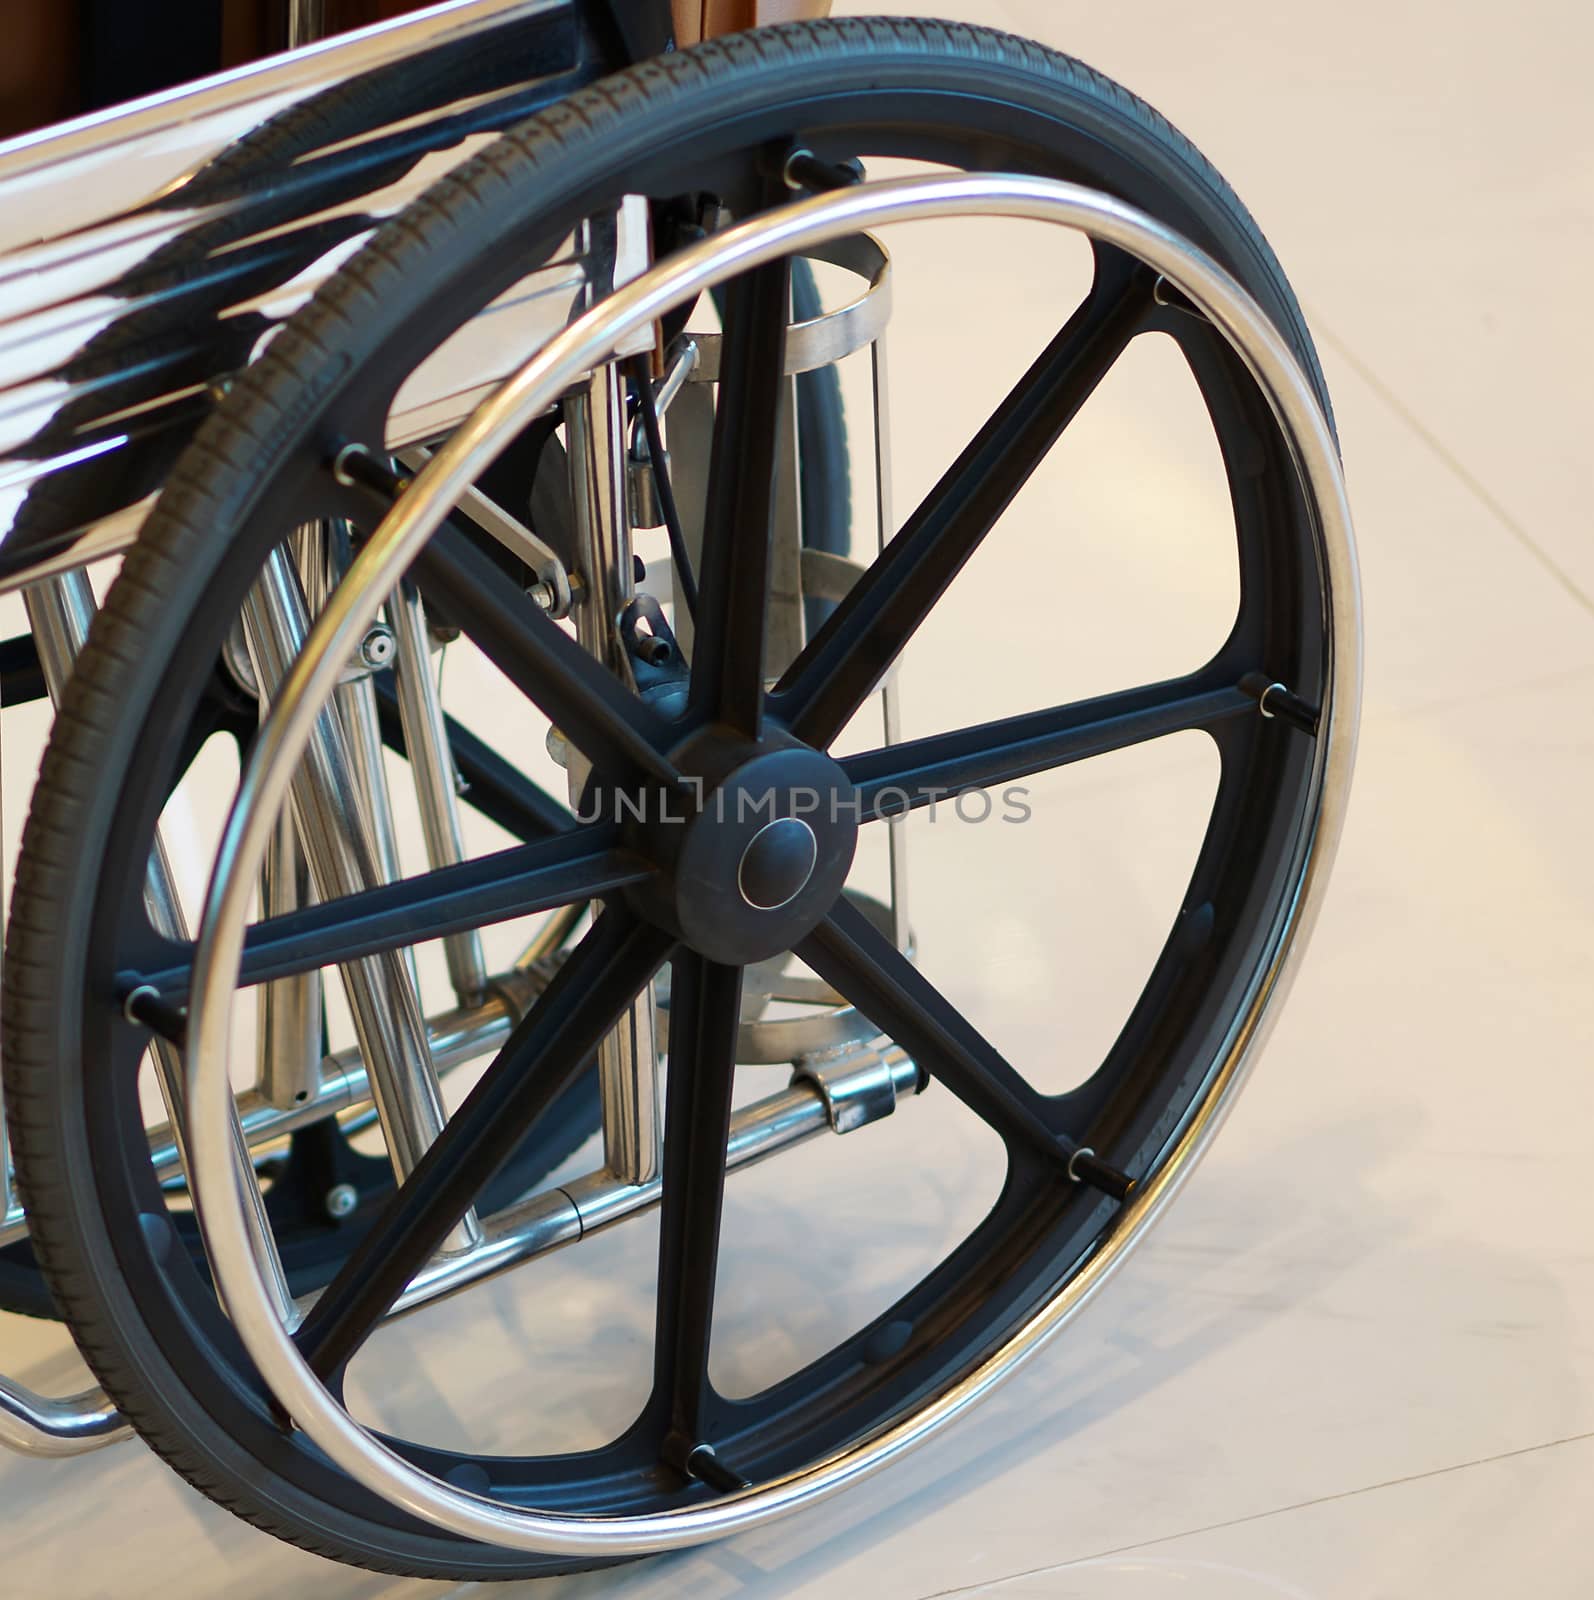 Wheel chair by ninun